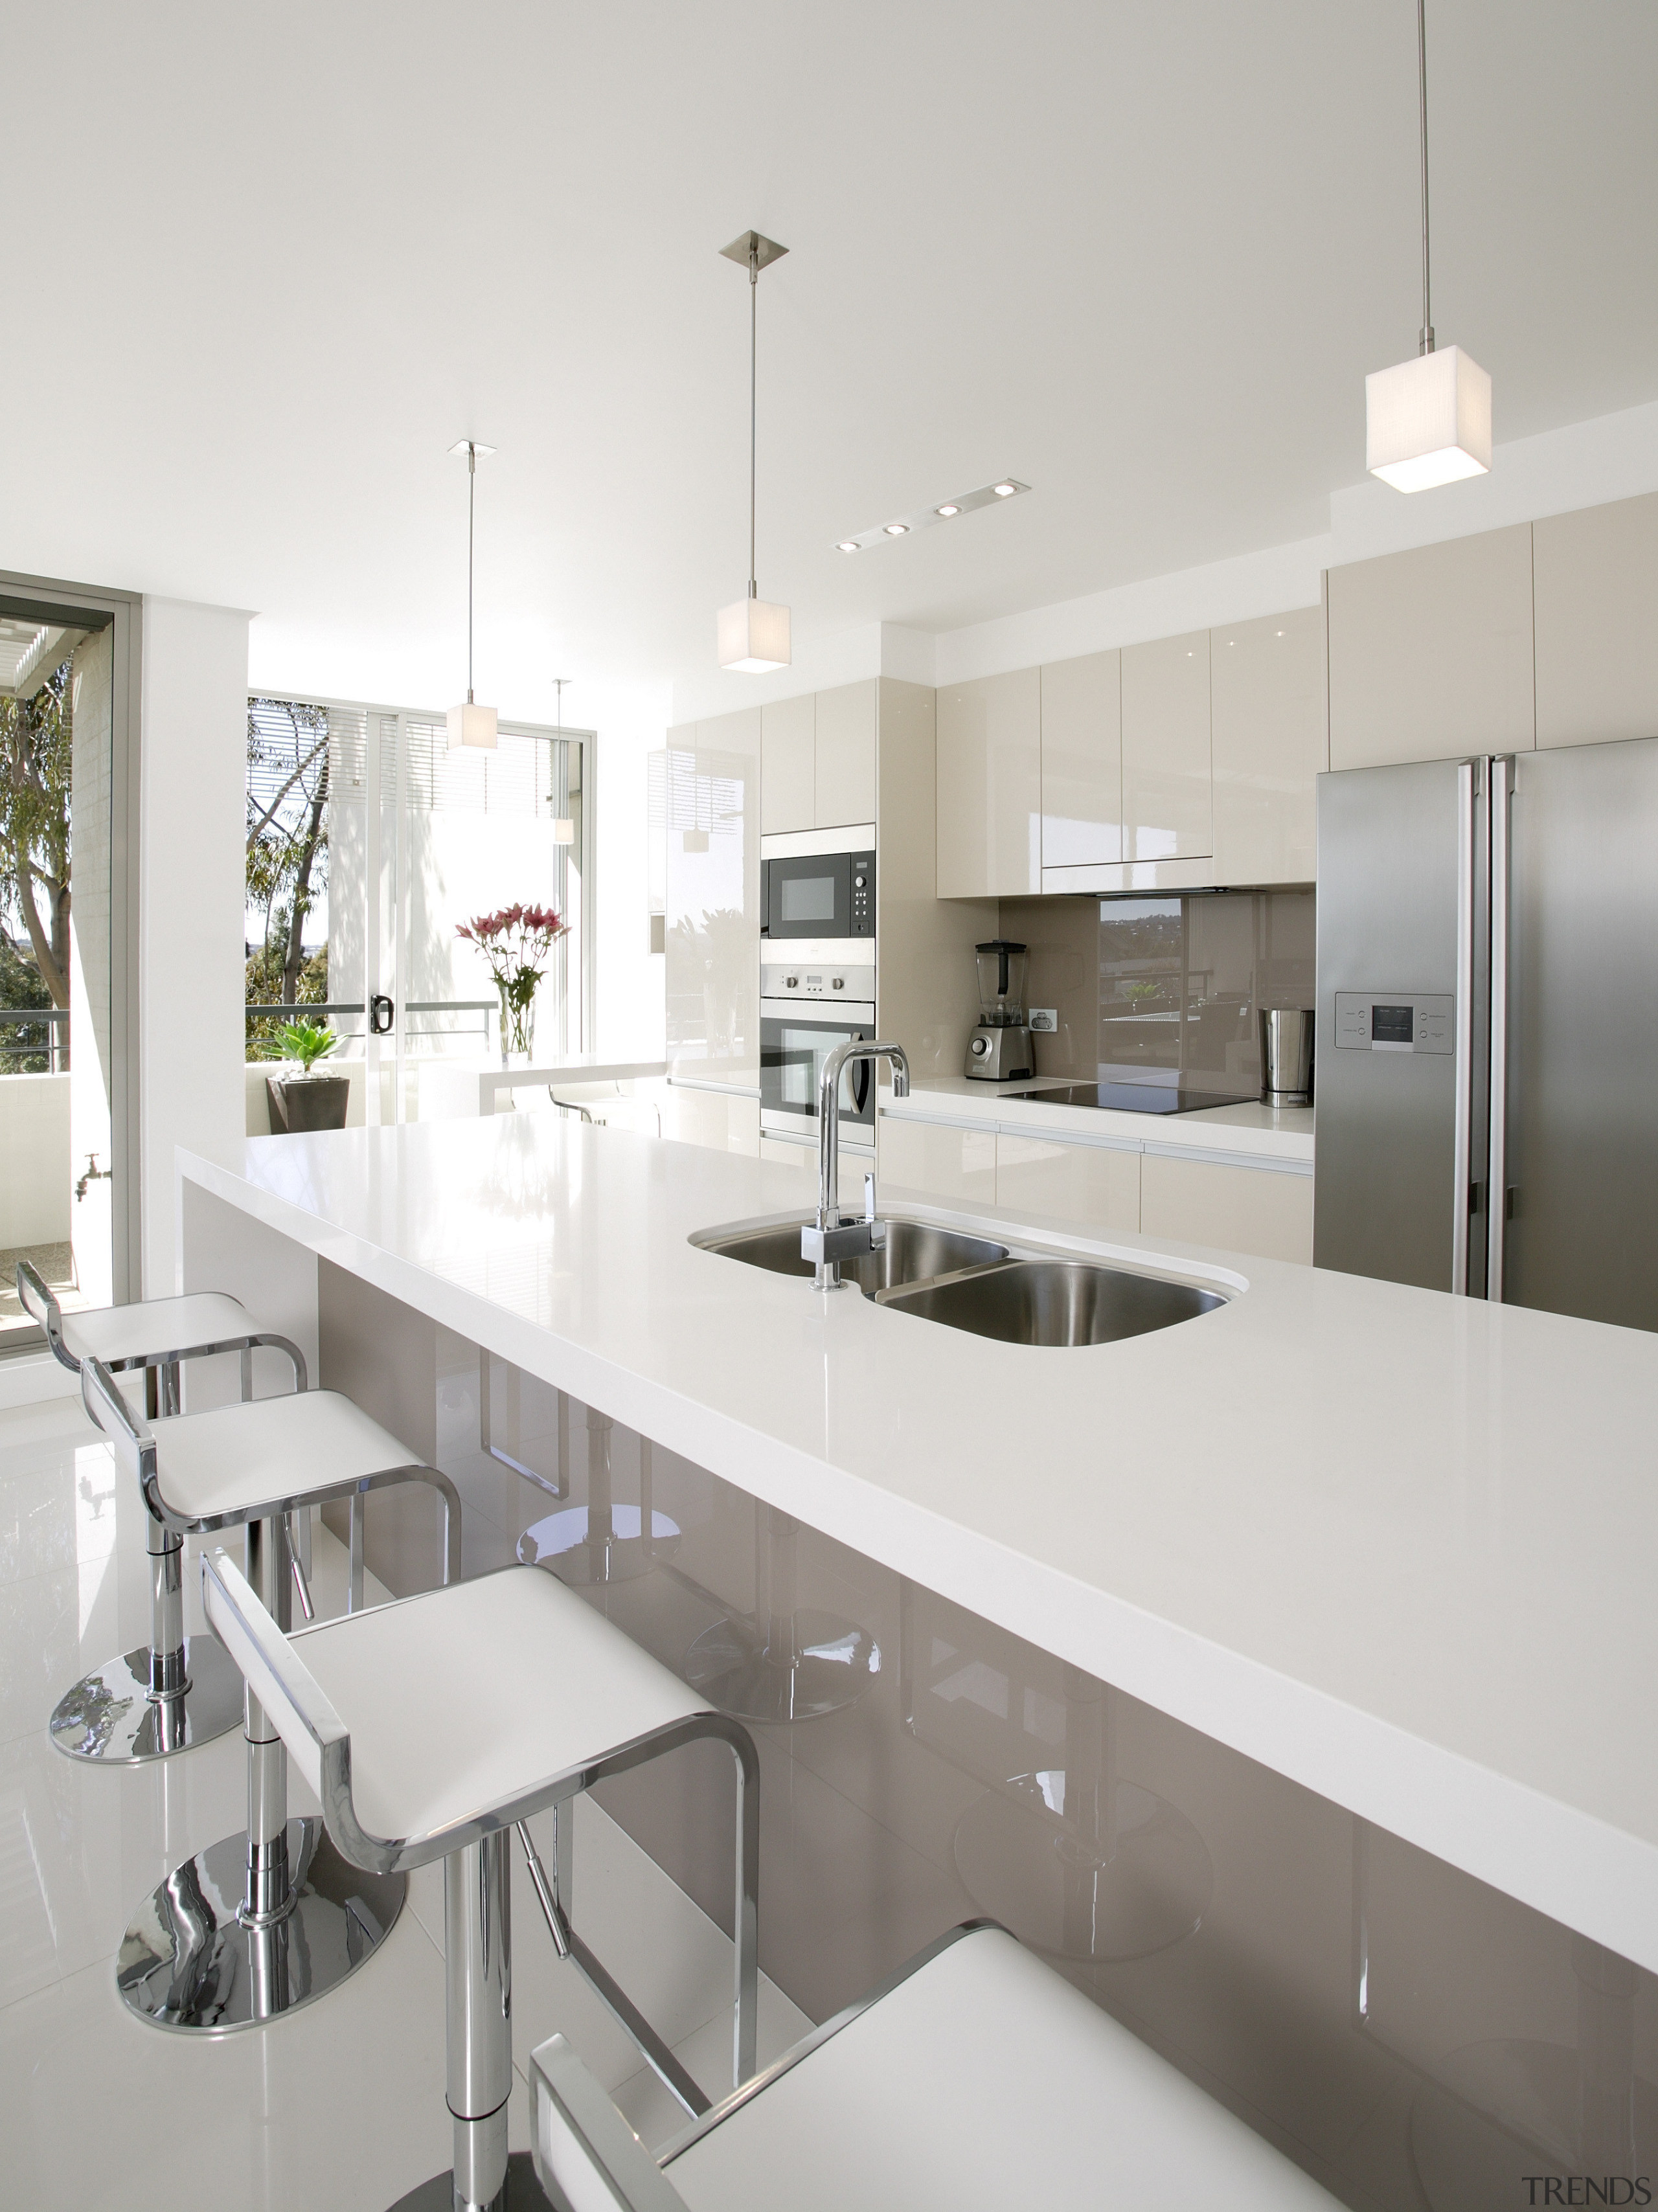 Image of kitchen designed by DesignLine which has architecture, countertop, interior design, kitchen, product design, white